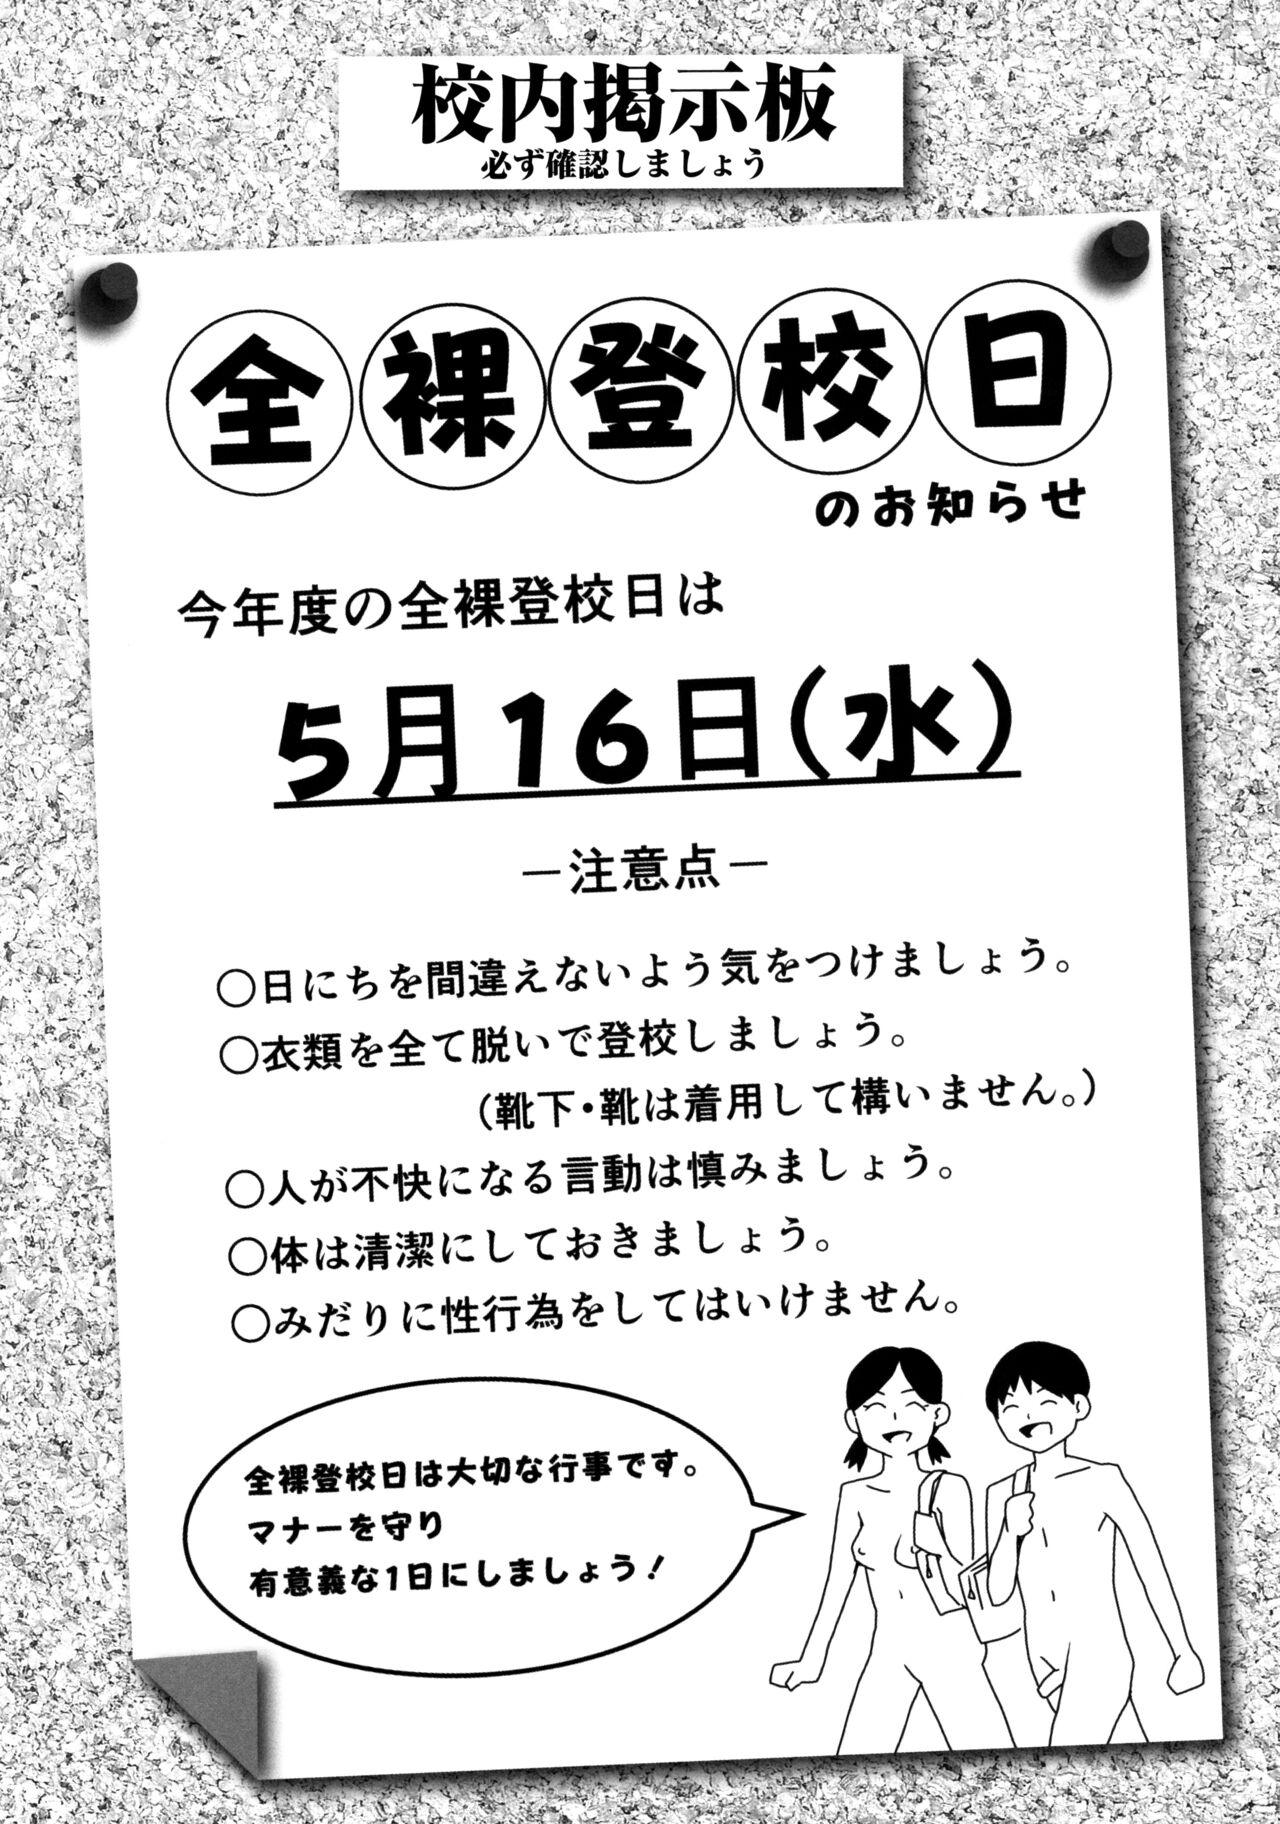 Watashi ga Zenra ni Natta Wake Melonbooks Gentei 8P Leaflet 1